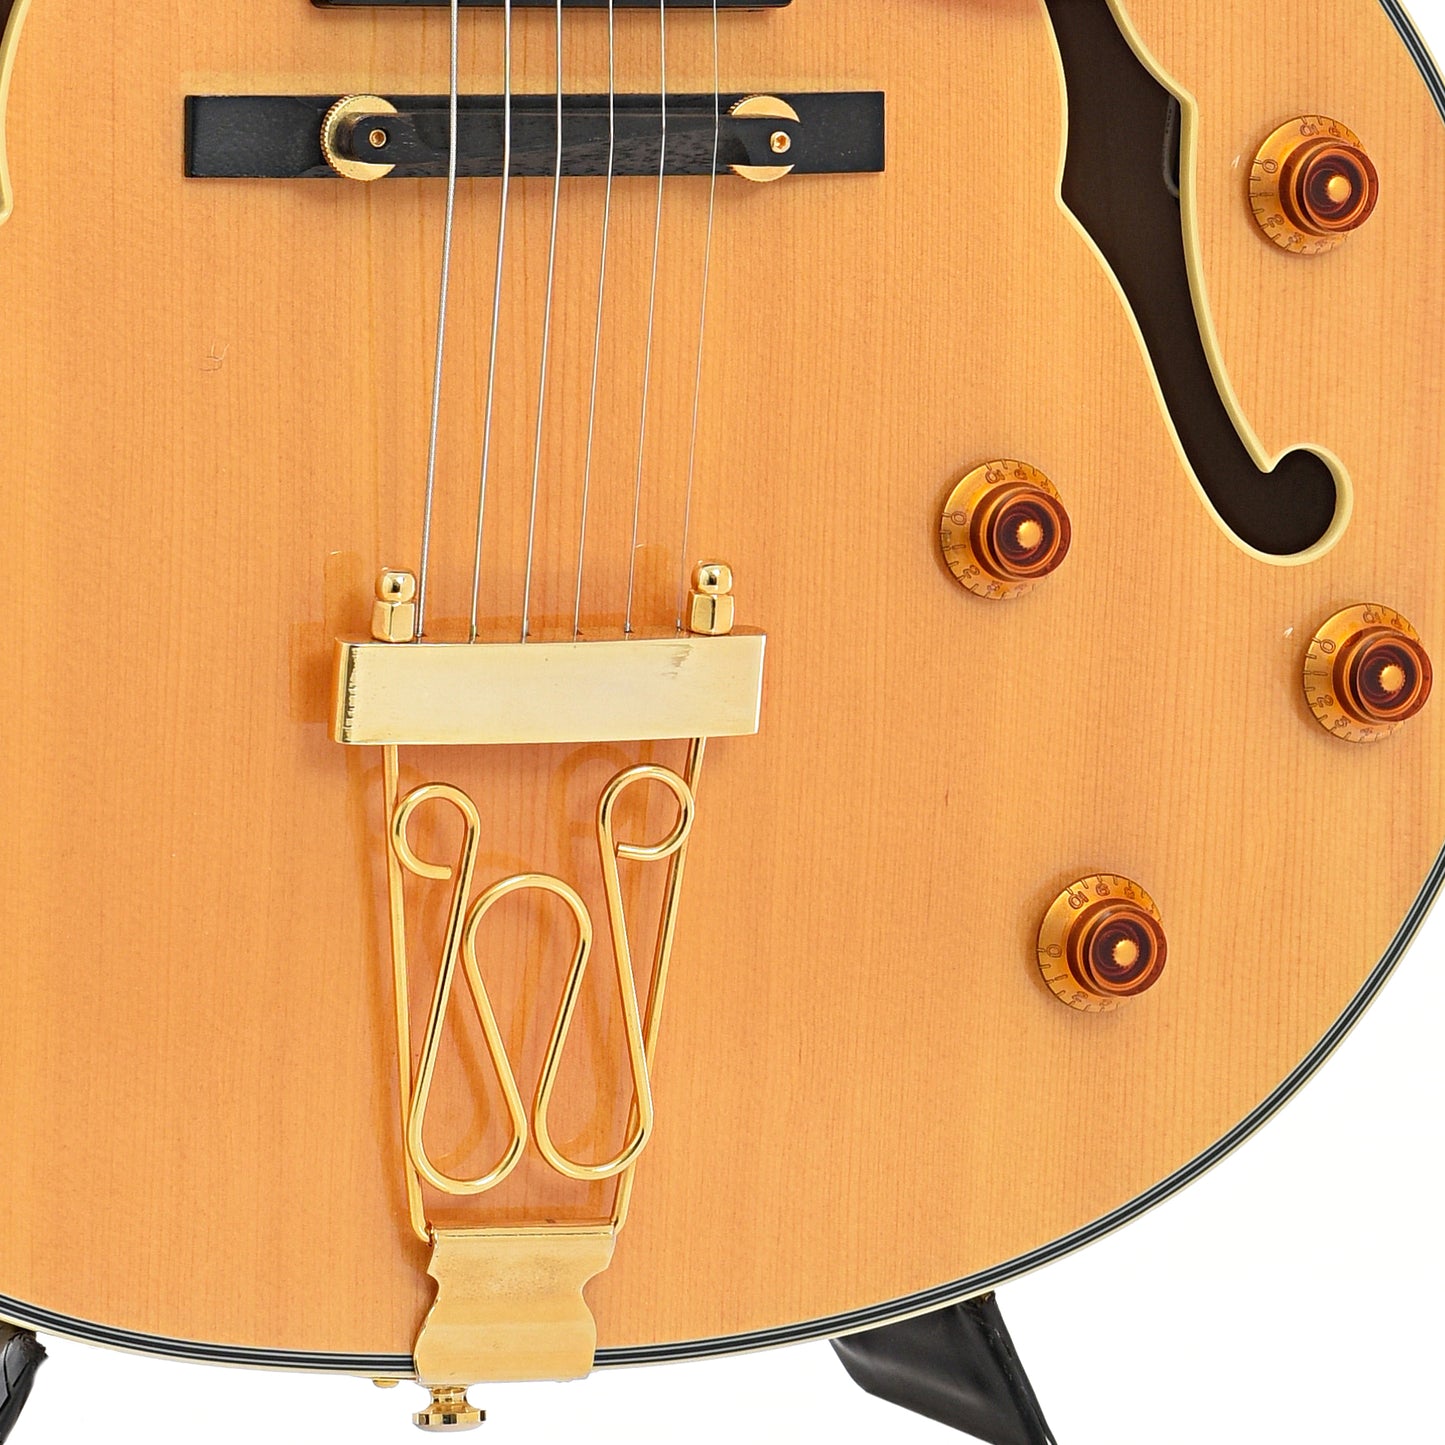 Tailpiece, bridge and controls of Epiphone Joe Pass Emperor II-NA Hollowbody Electric Guitar